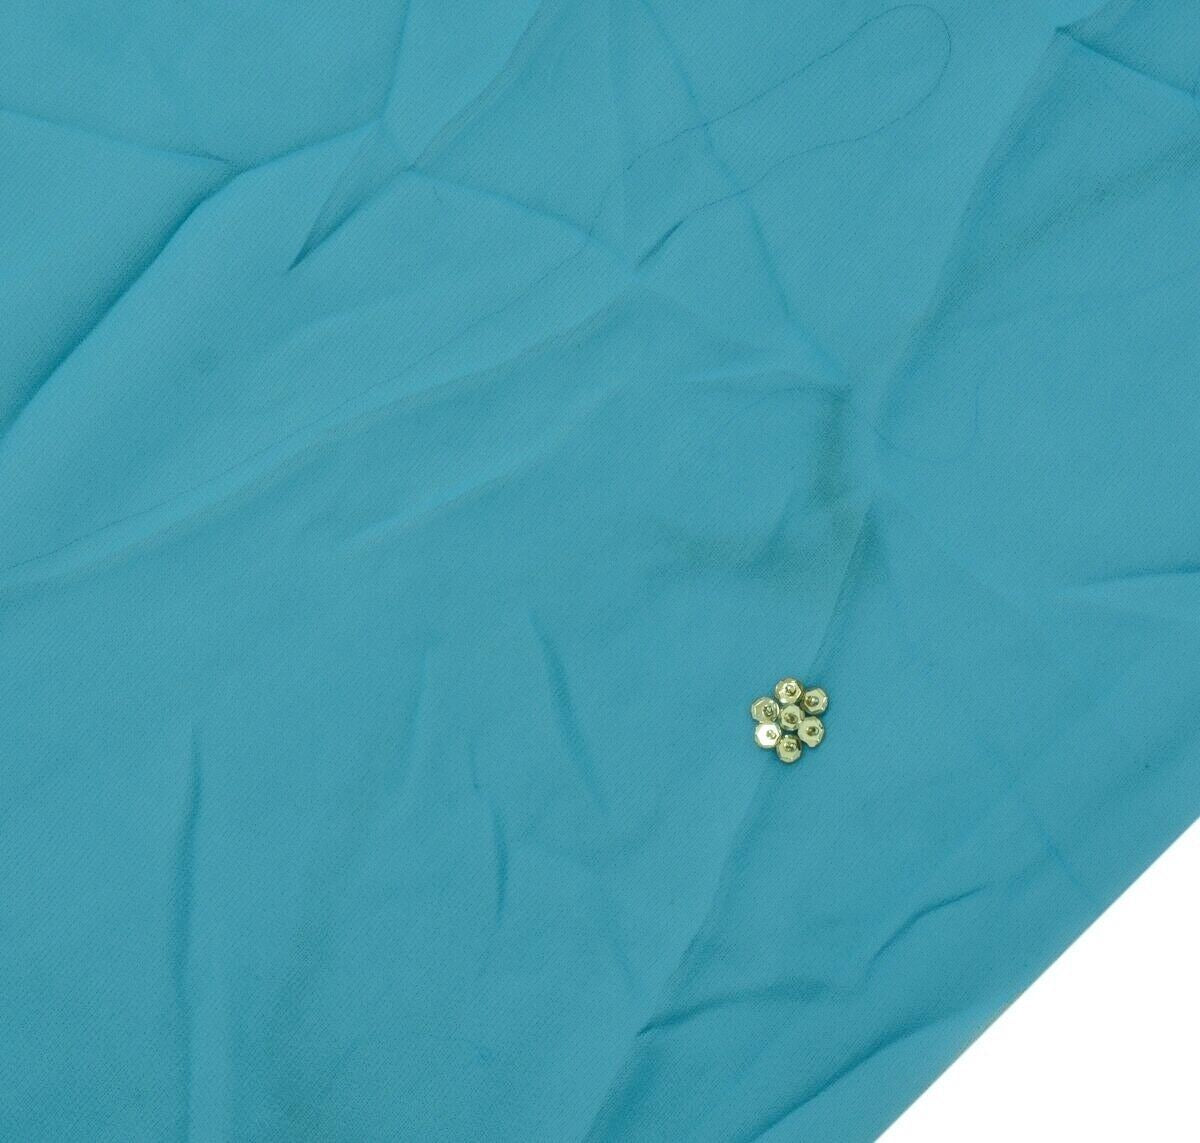 Blend Georgette Silk Blue Vintage Sari Remnant Scrap Fabric for Sewing Craft